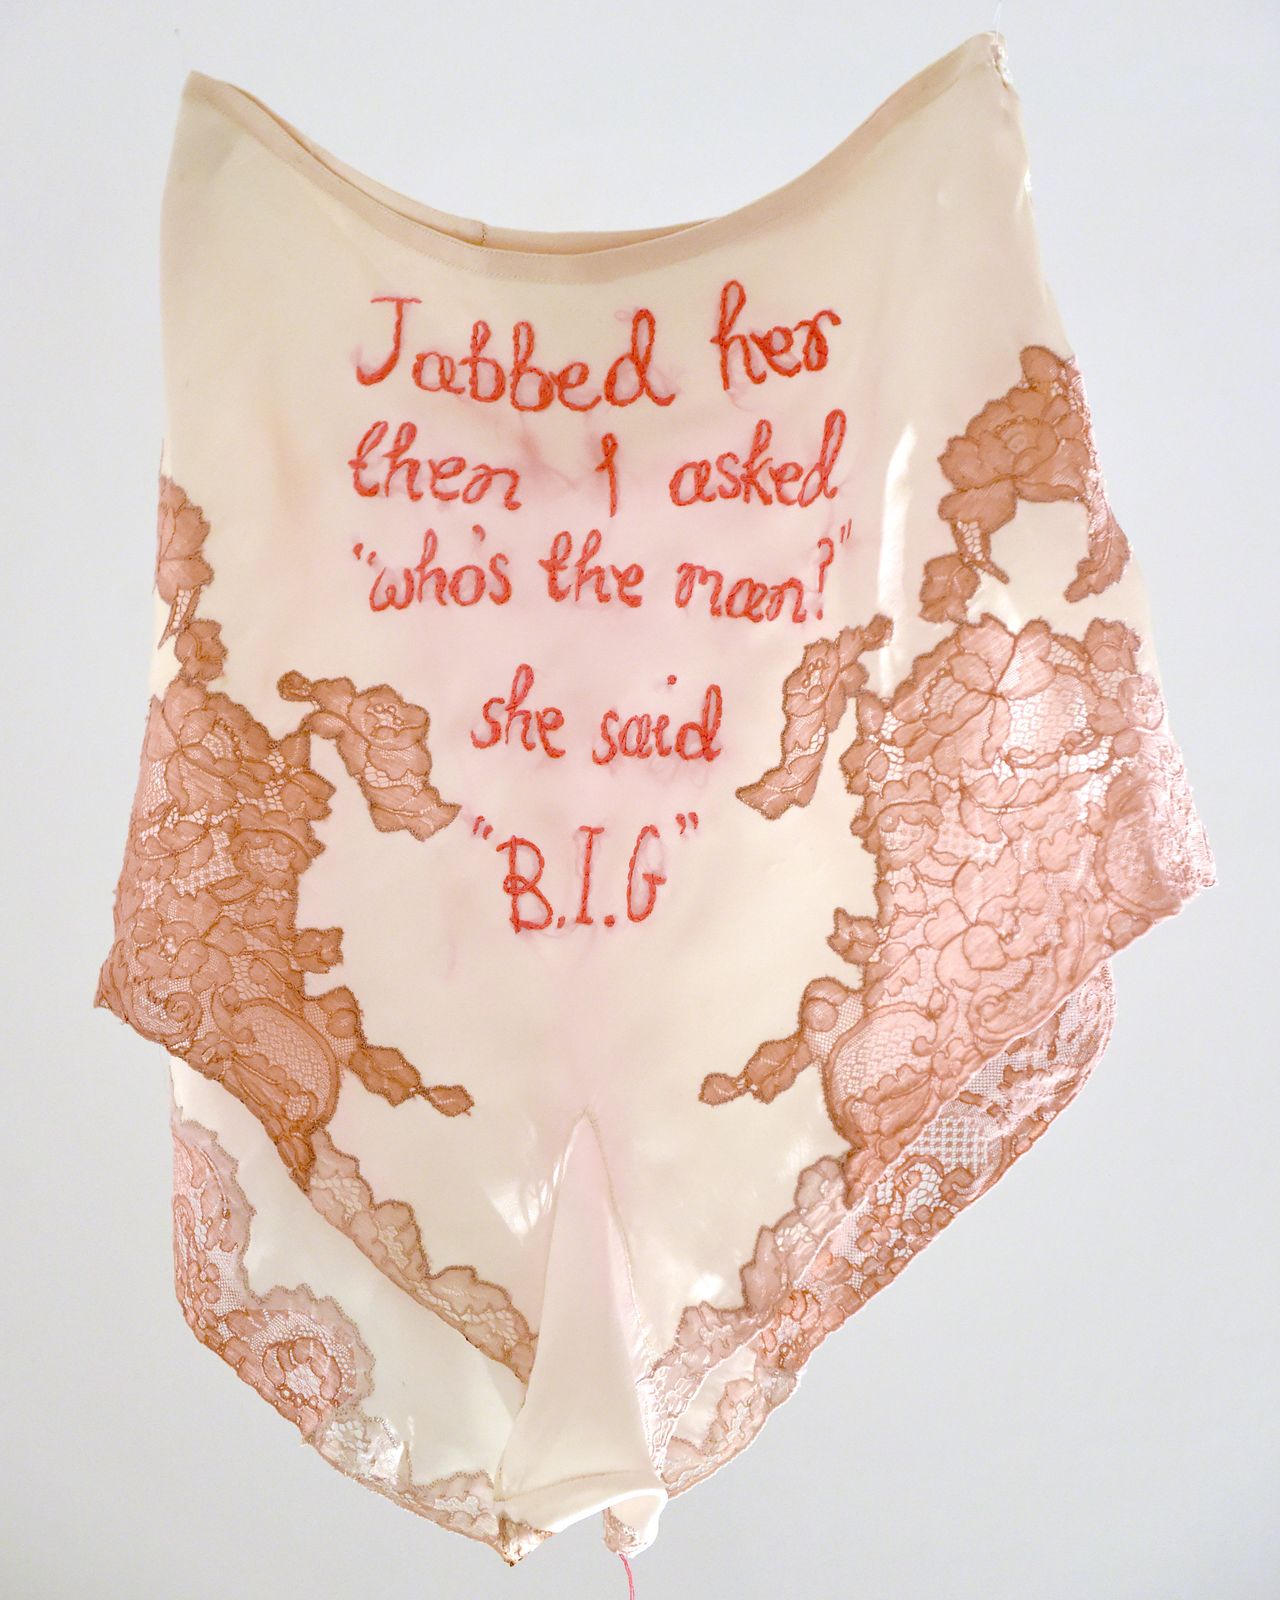 Feminist Artist Embroidered Rap Lyrics Onto Lingerie To Start A  Conversation